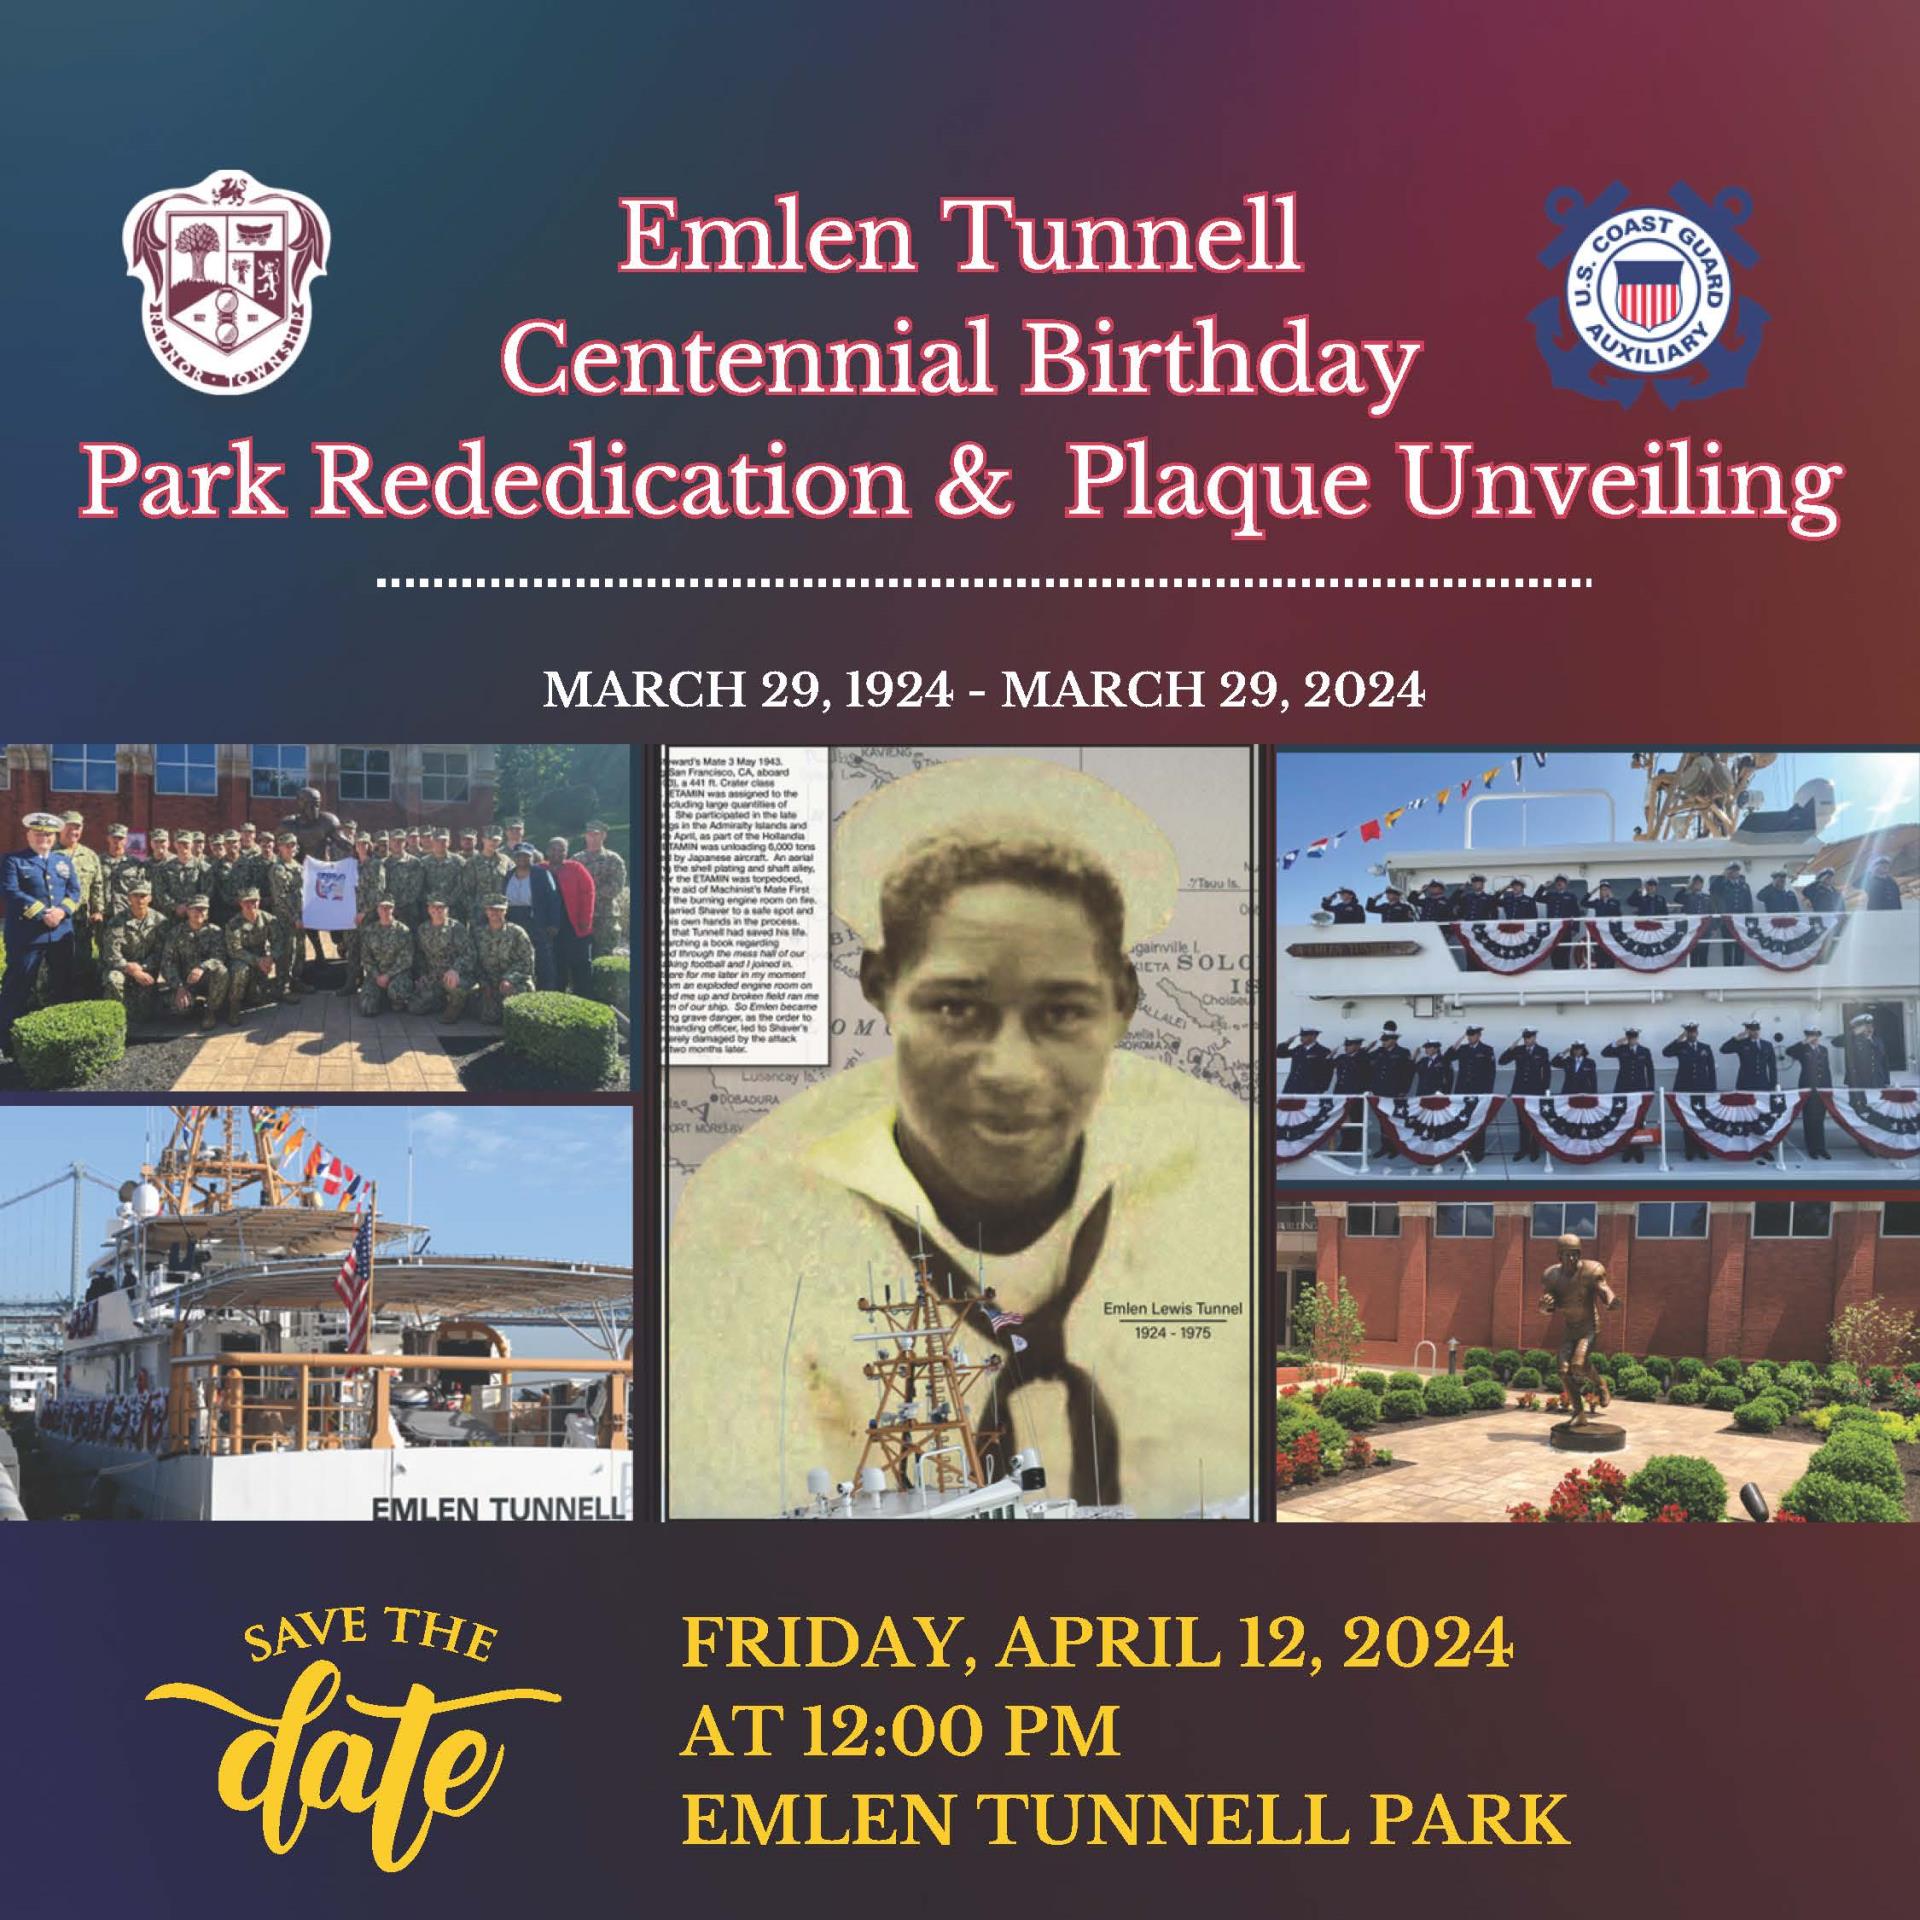 Emlen Tunnell Centennial Birthday Park Rededication & Plaque Unveiling